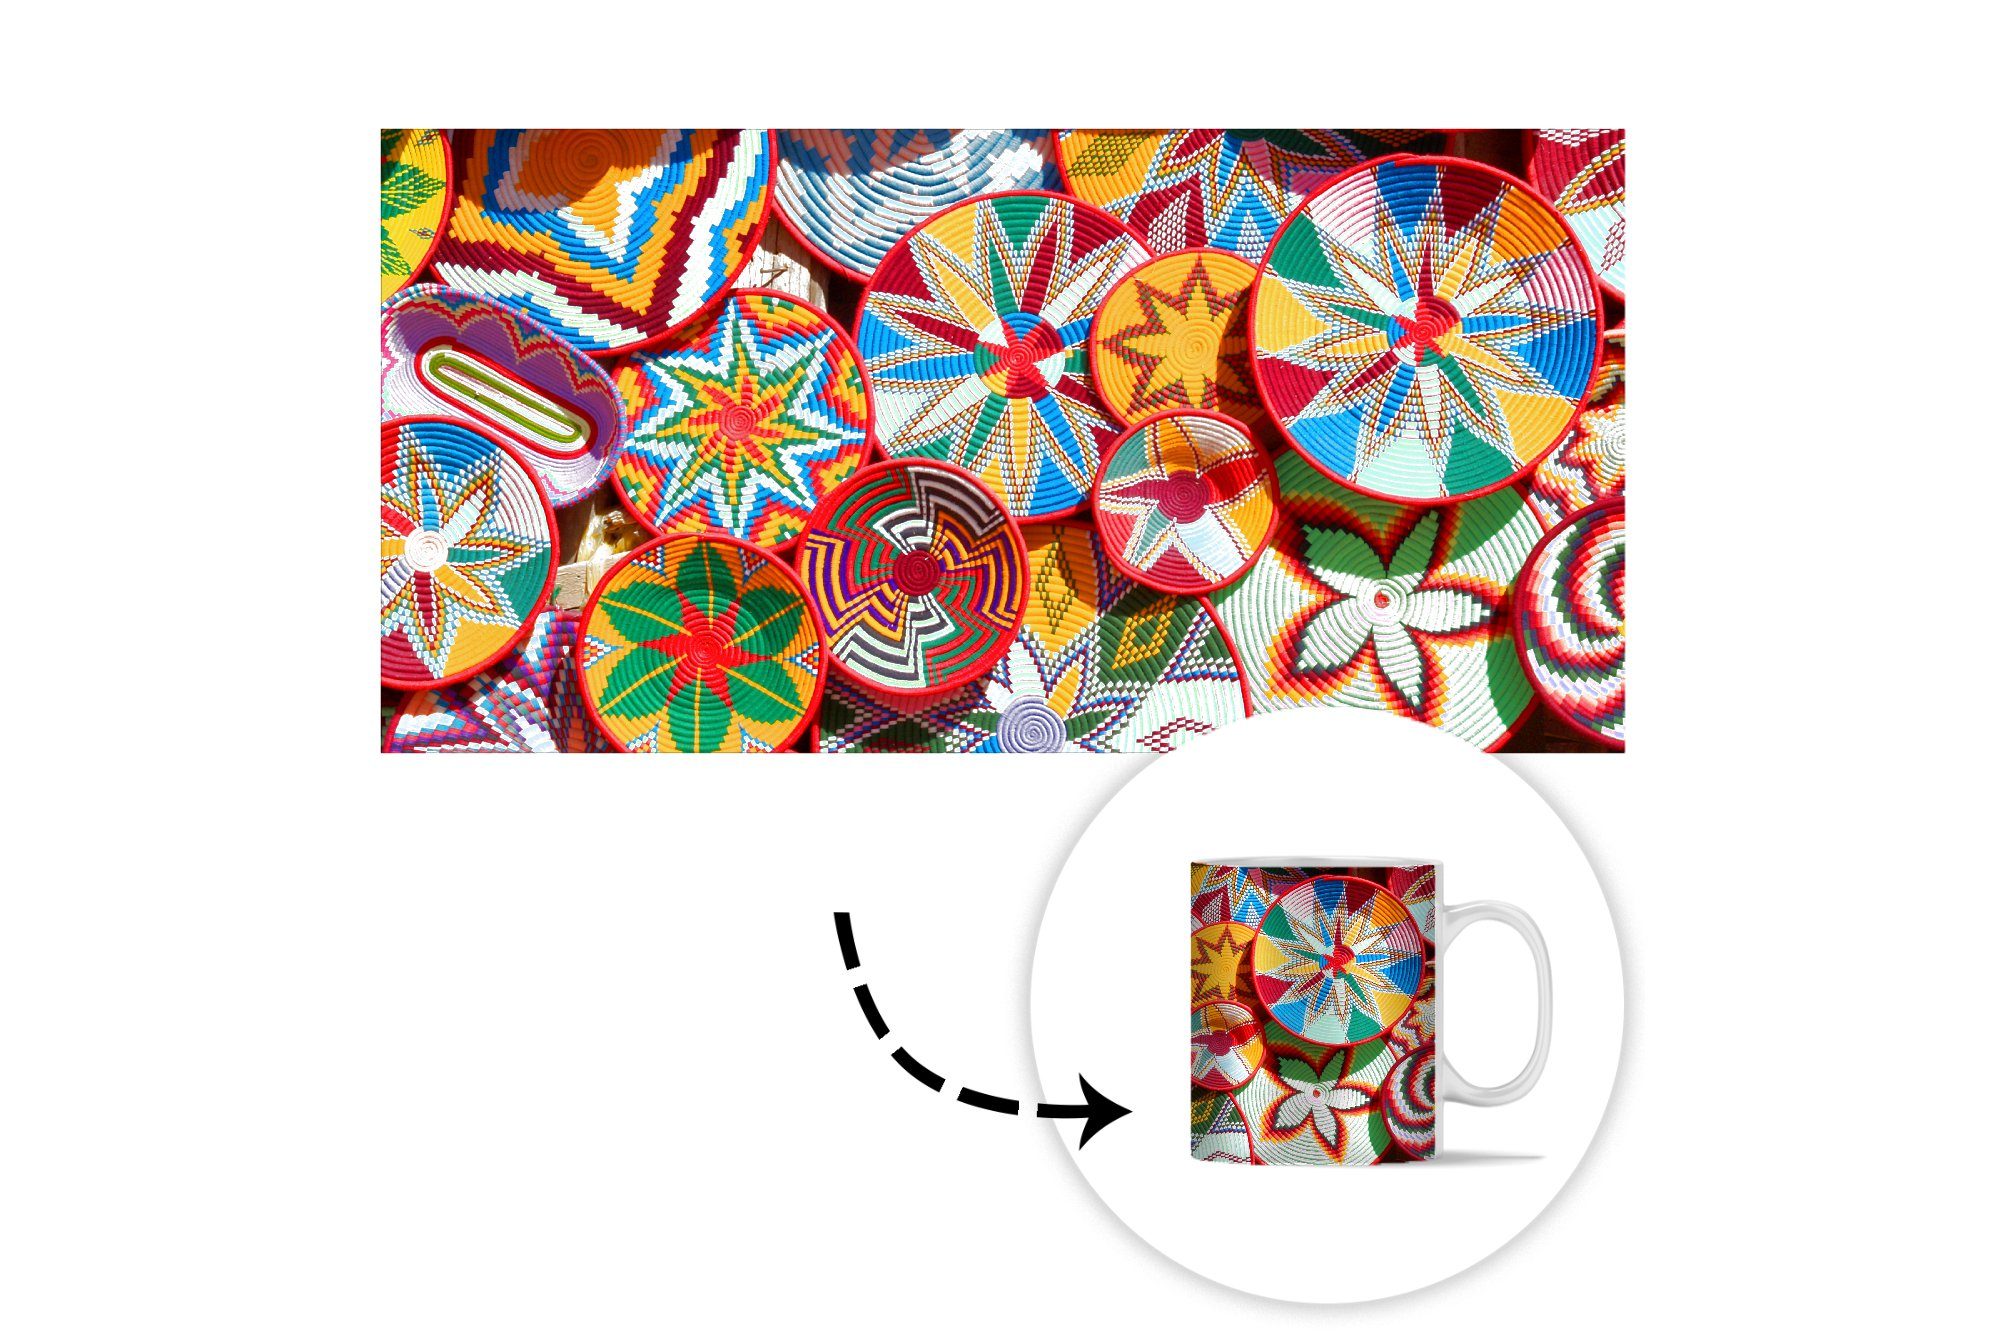 MuchoWow Tasse Kreis - Teetasse, Becher, Teetasse, Farben, Geschenk Keramik, Muster - Kaffeetassen